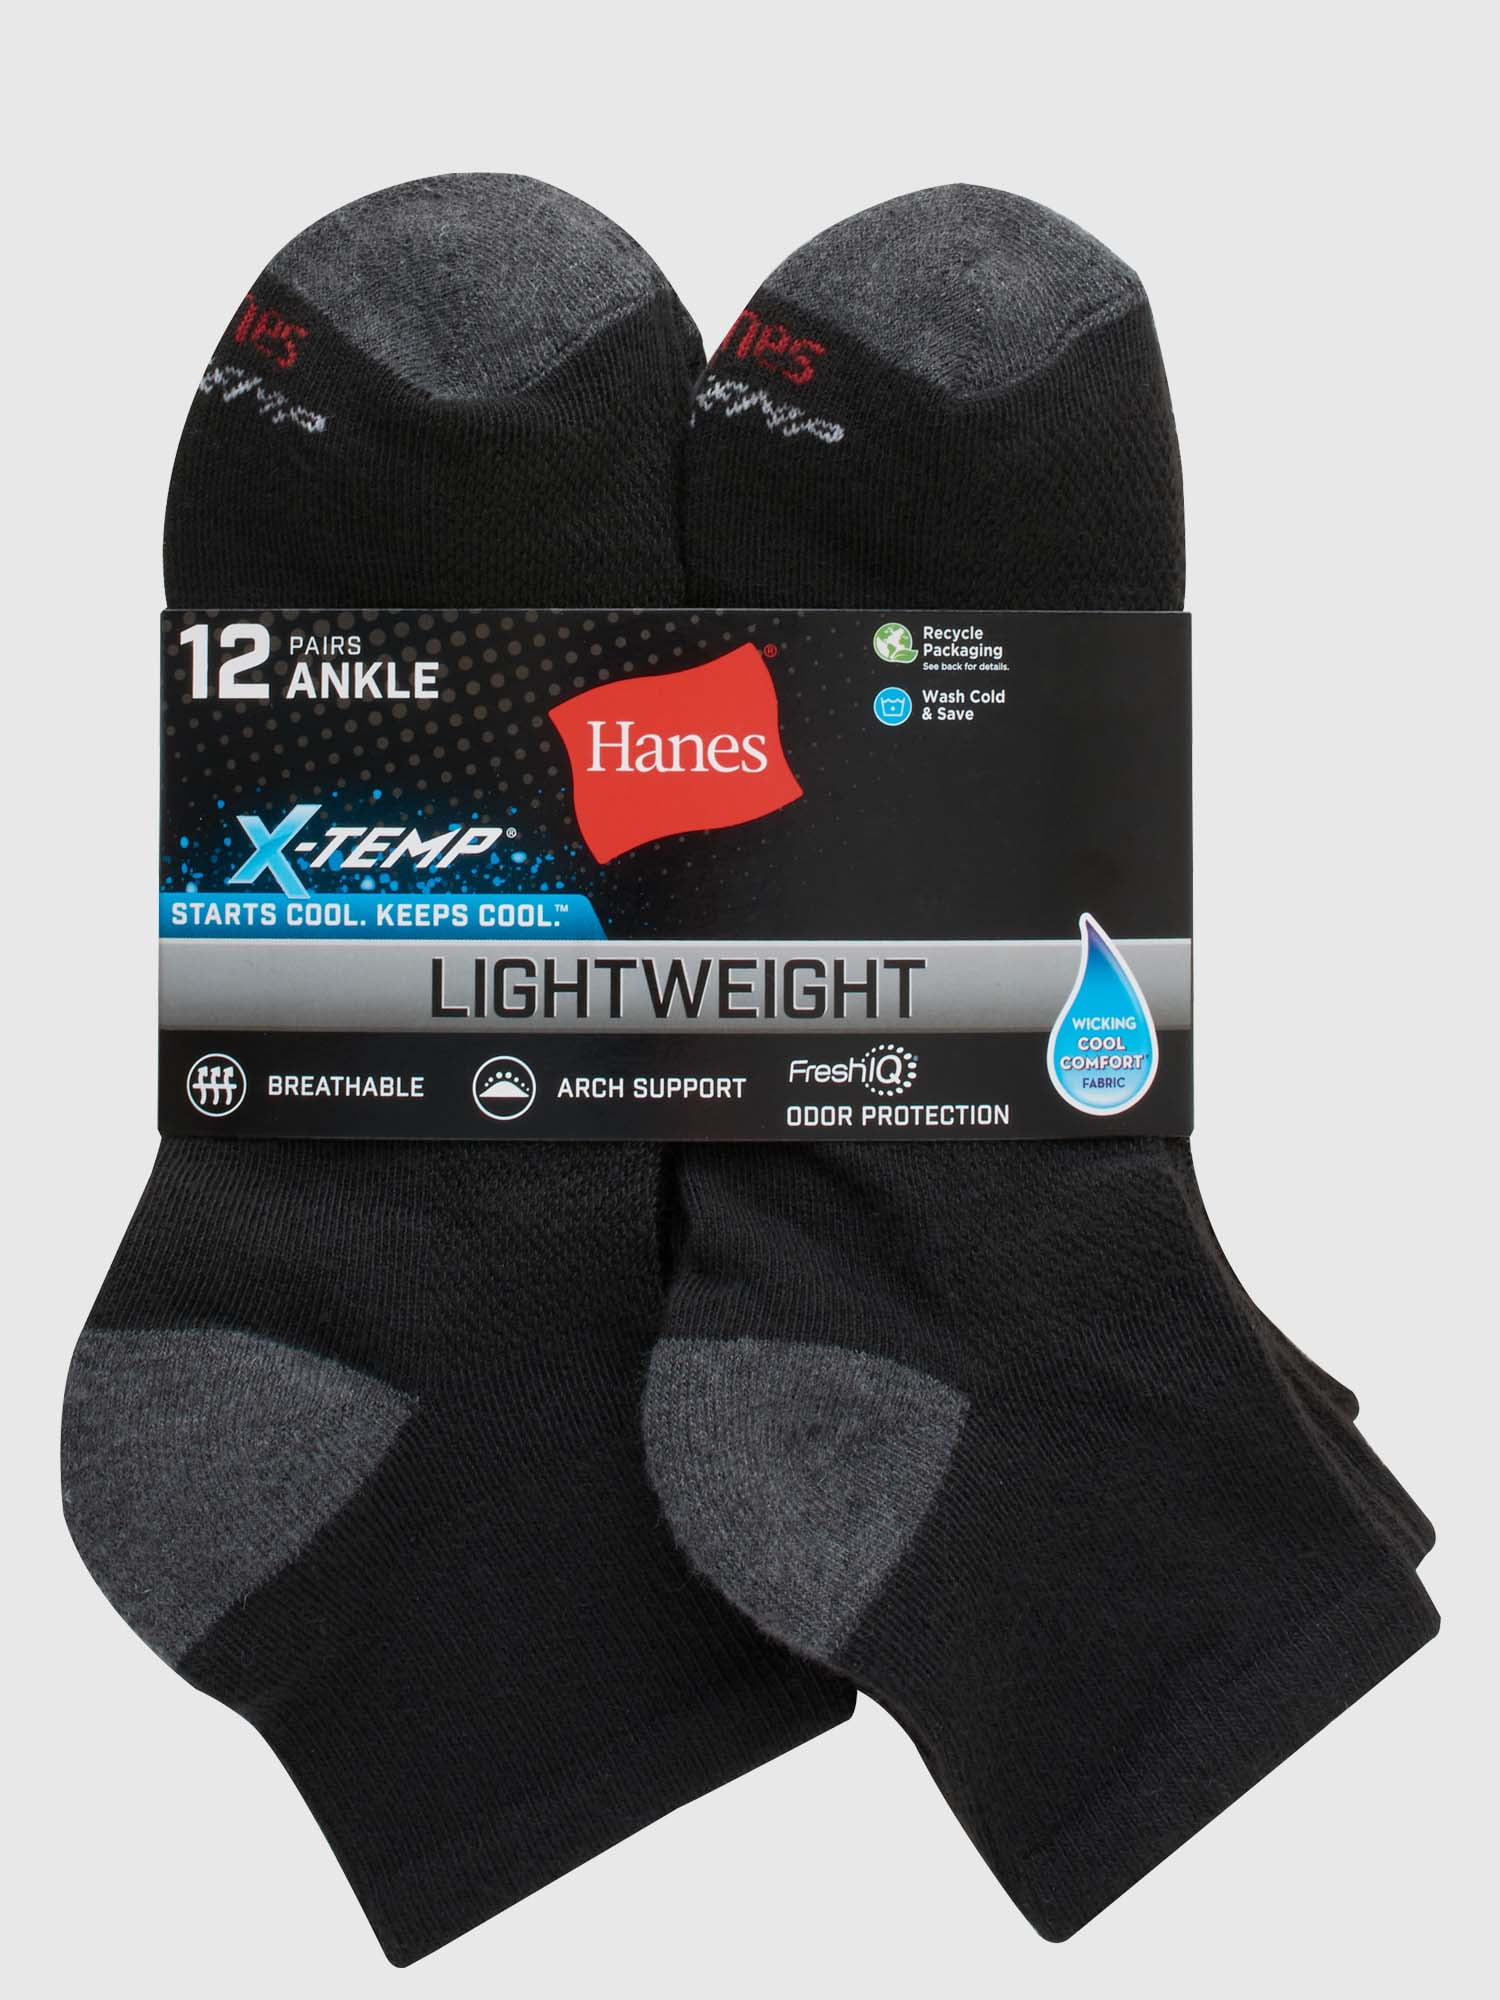 Hanes Men's X-Temp Active Cool Lightweight Ankle Socks, 12-Pack